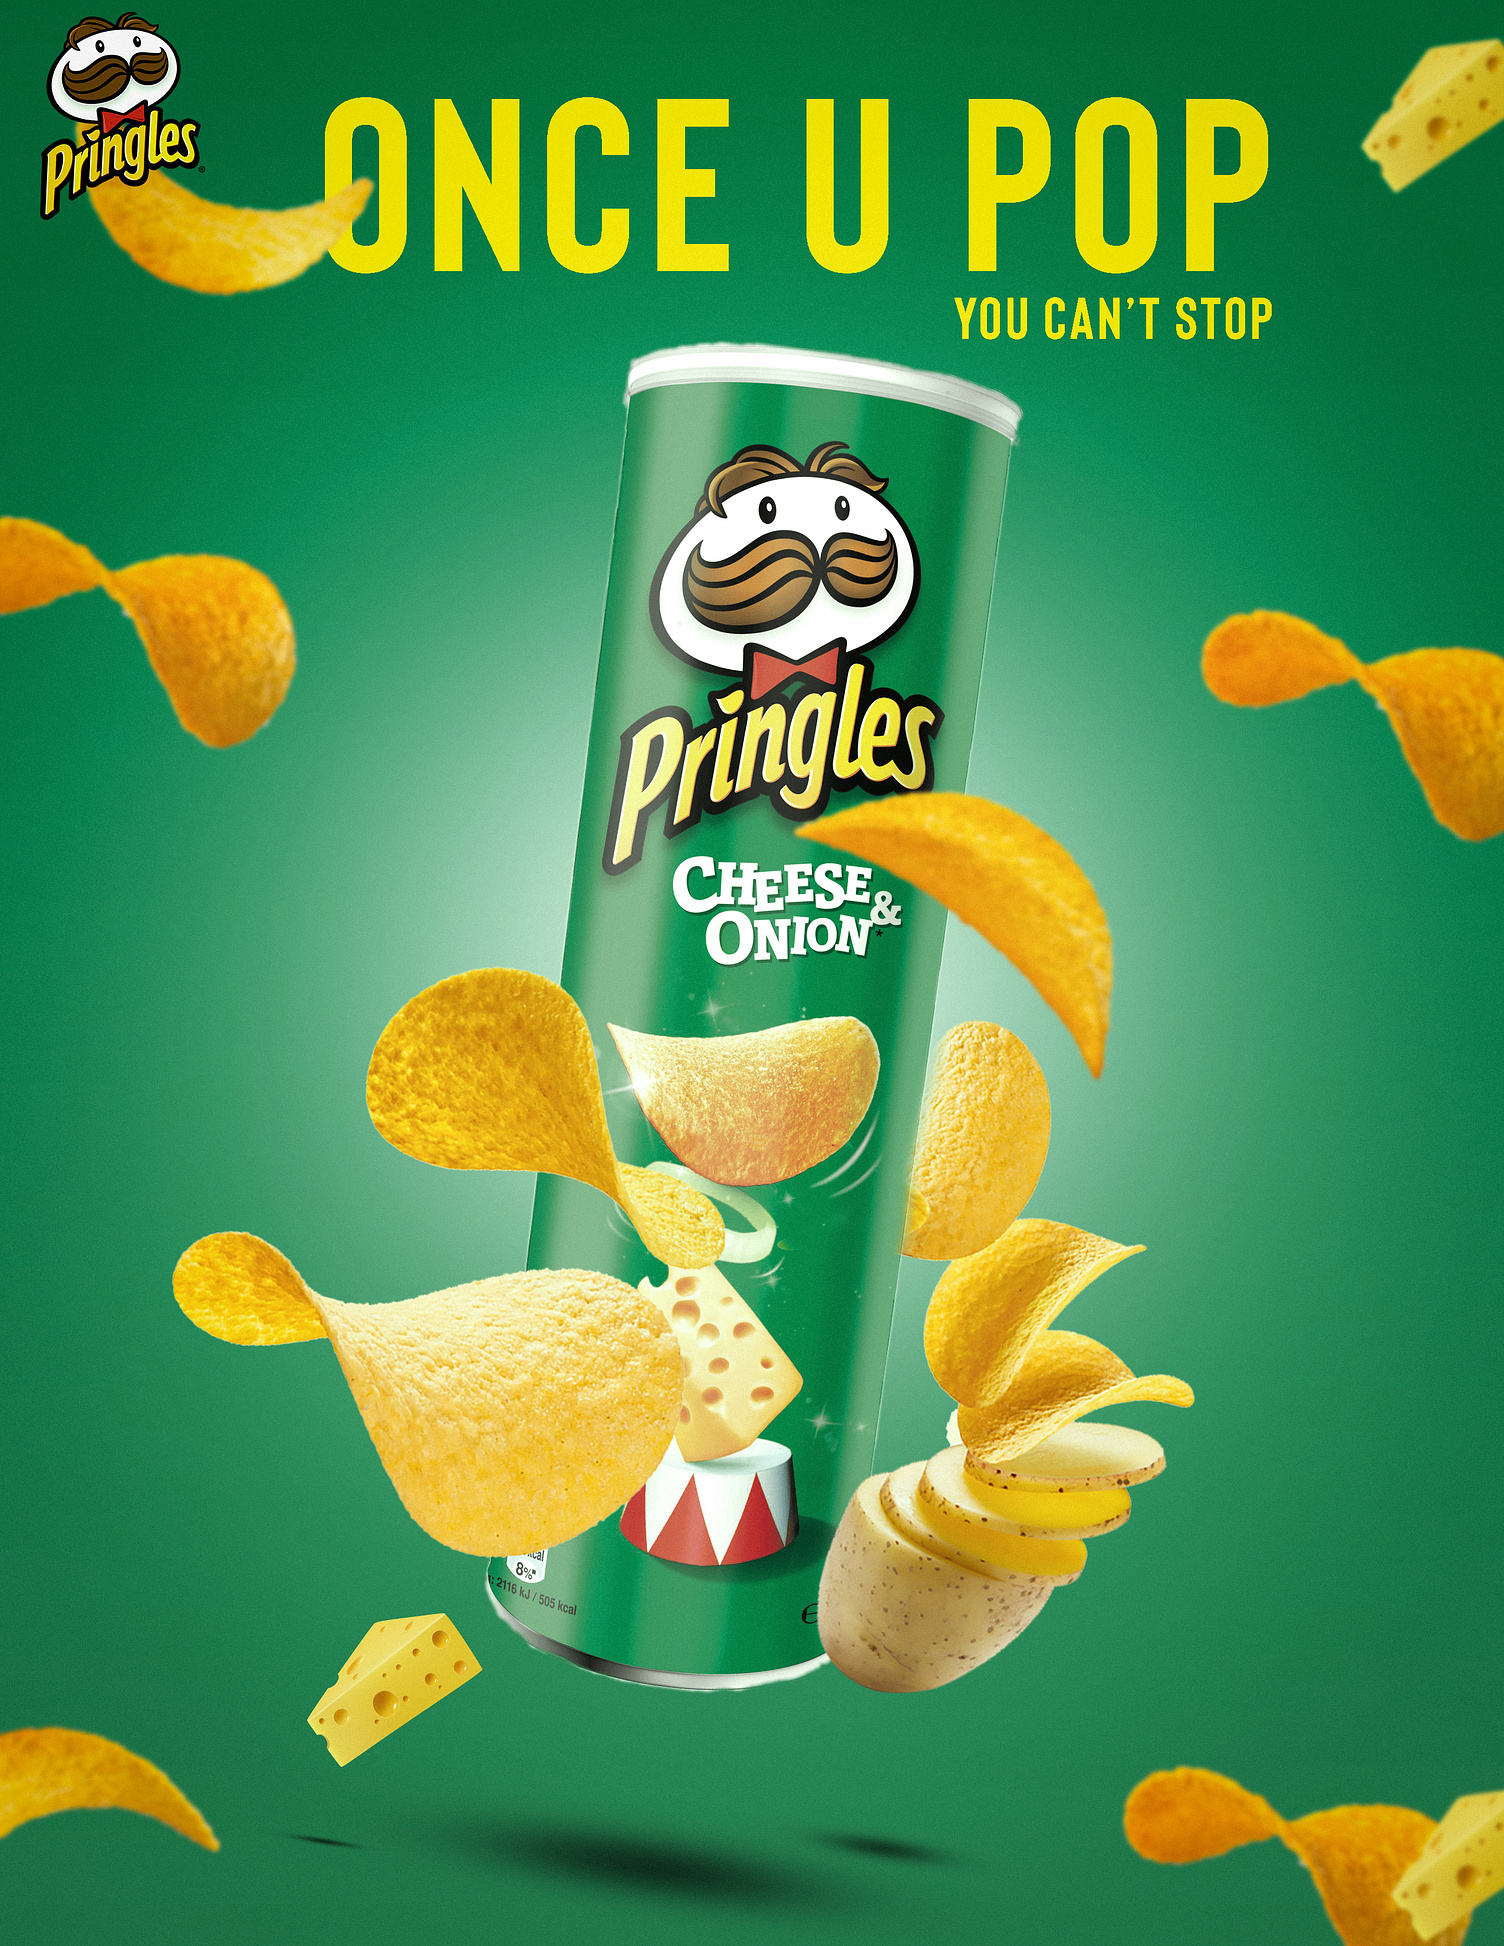 Pringles advertisement design by Kaung Myat Thu on Dribbble